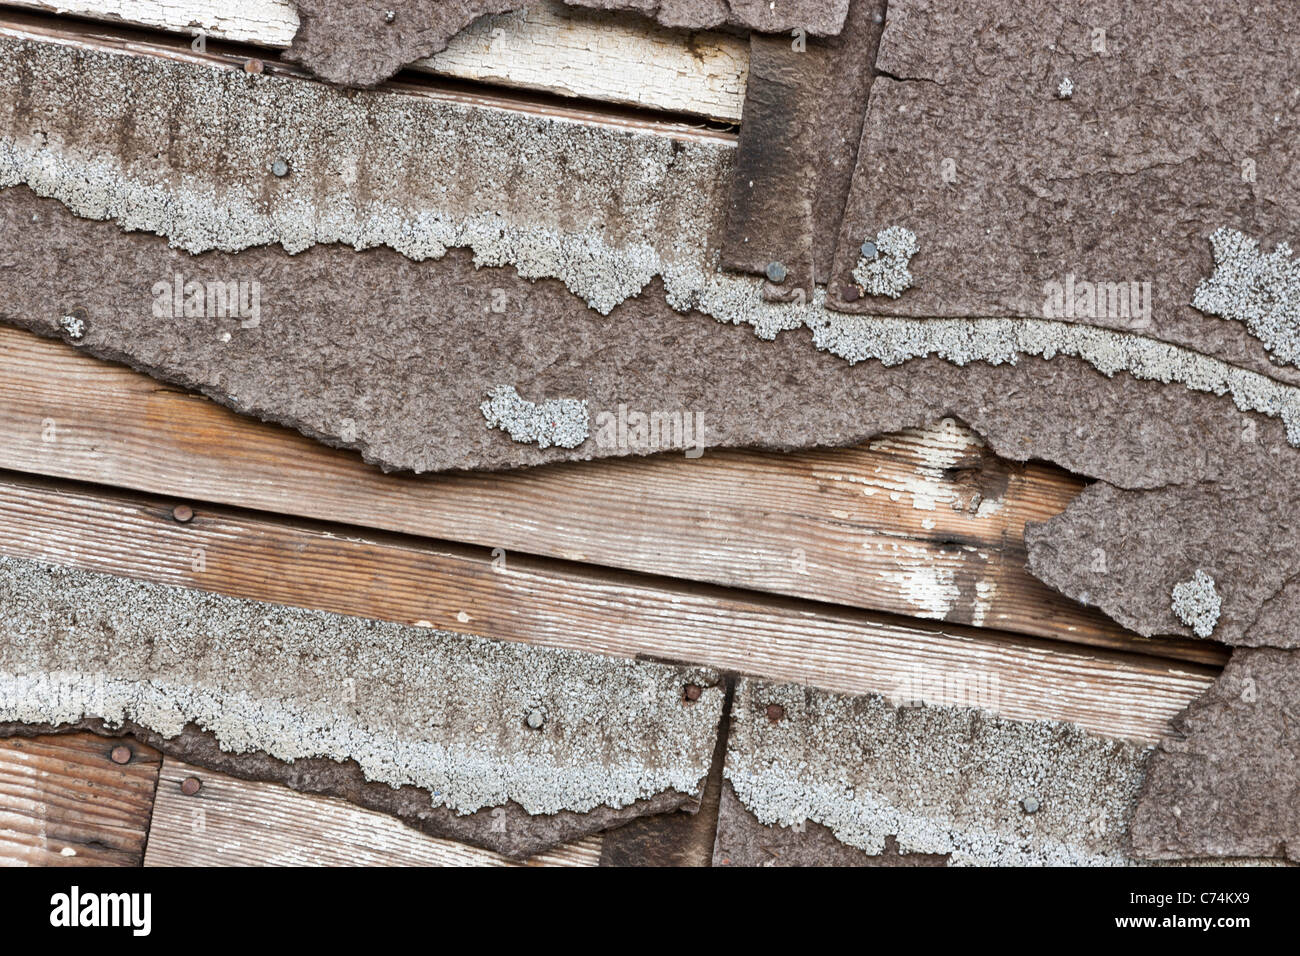 Asbestos composition asphalt shingles deteriorating Stock Photo